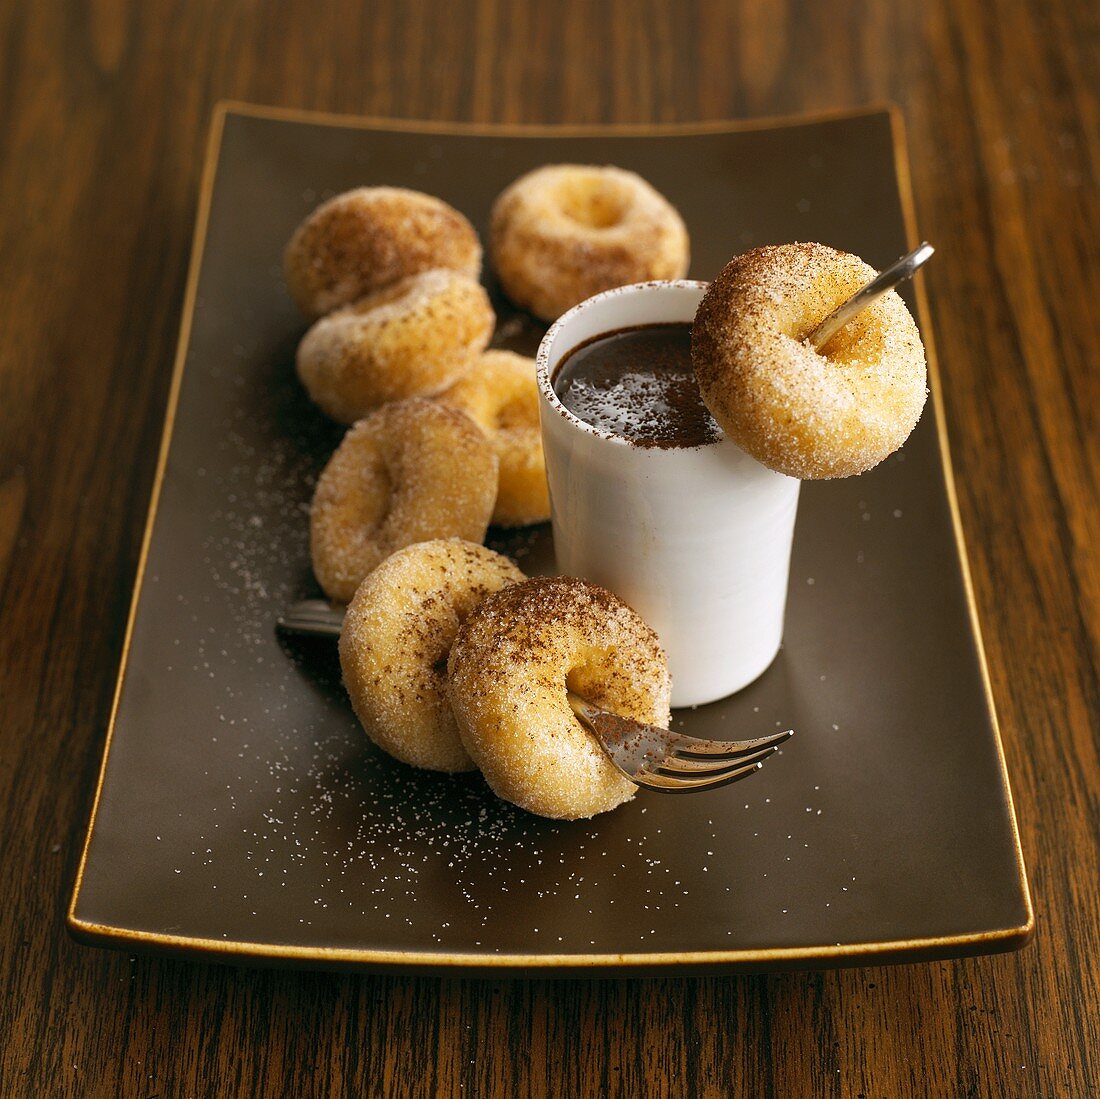 Mini doughnuts with chocolate sauce